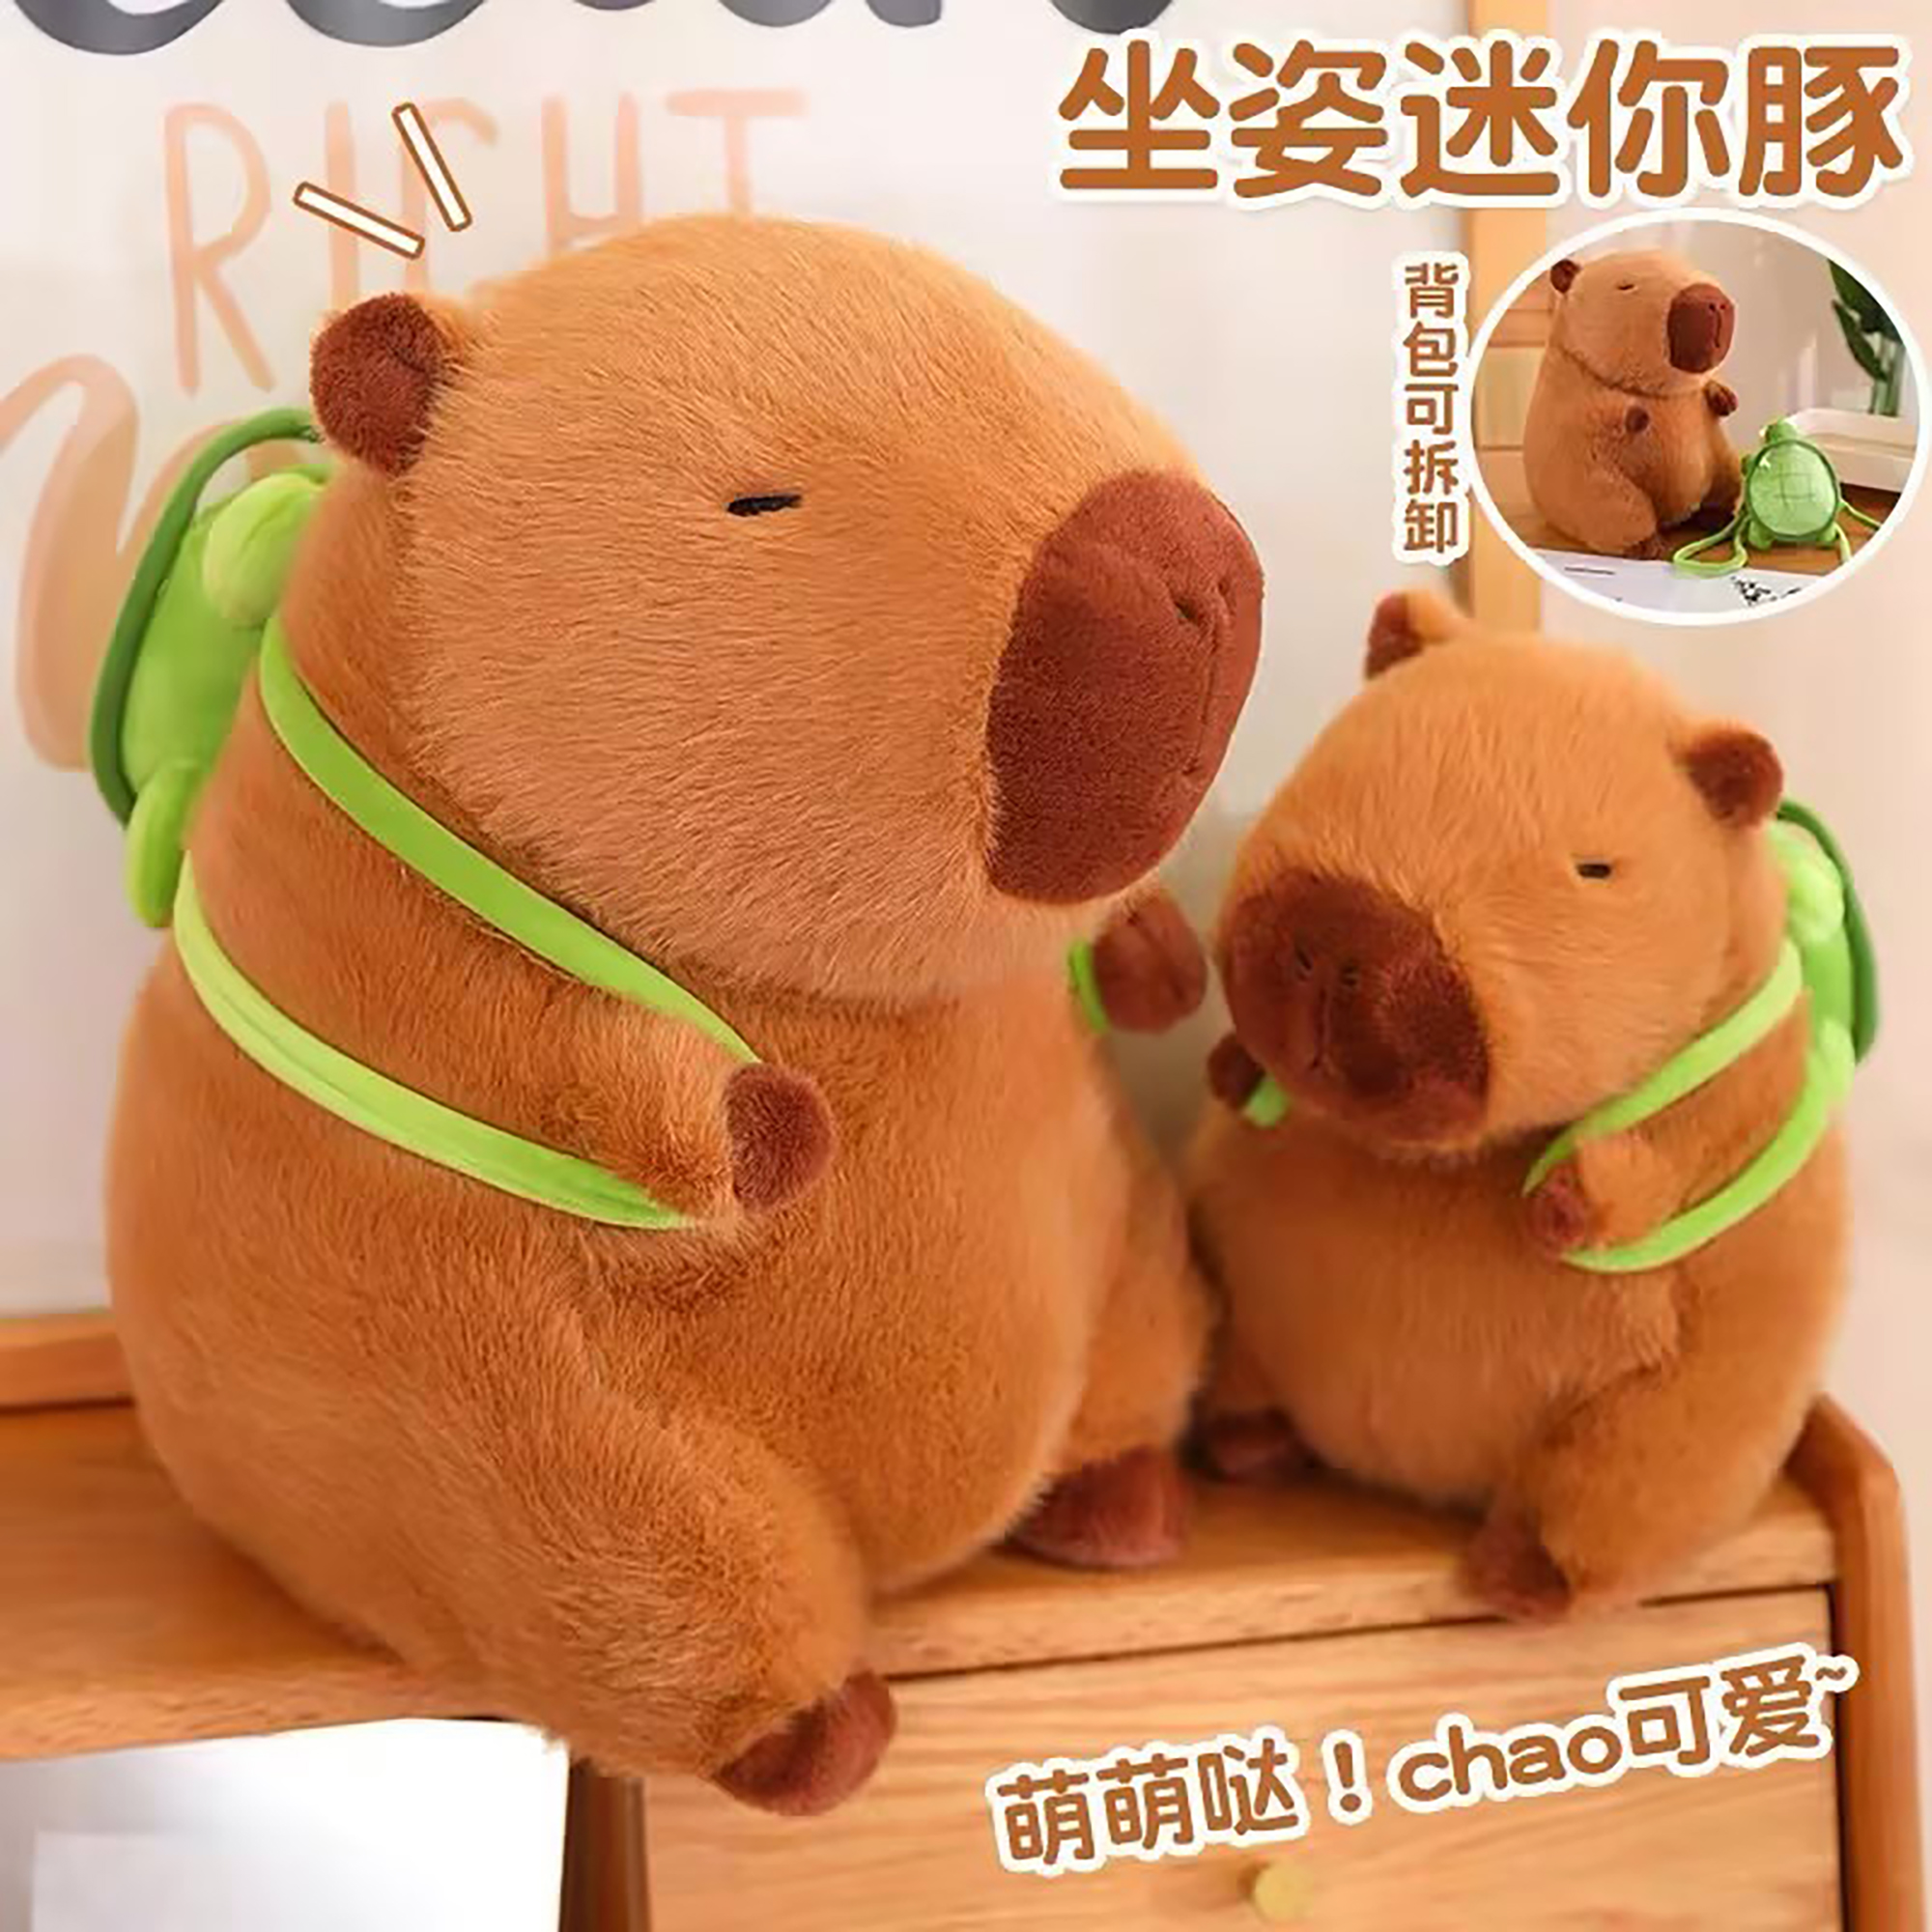 capybara-02.jpeg